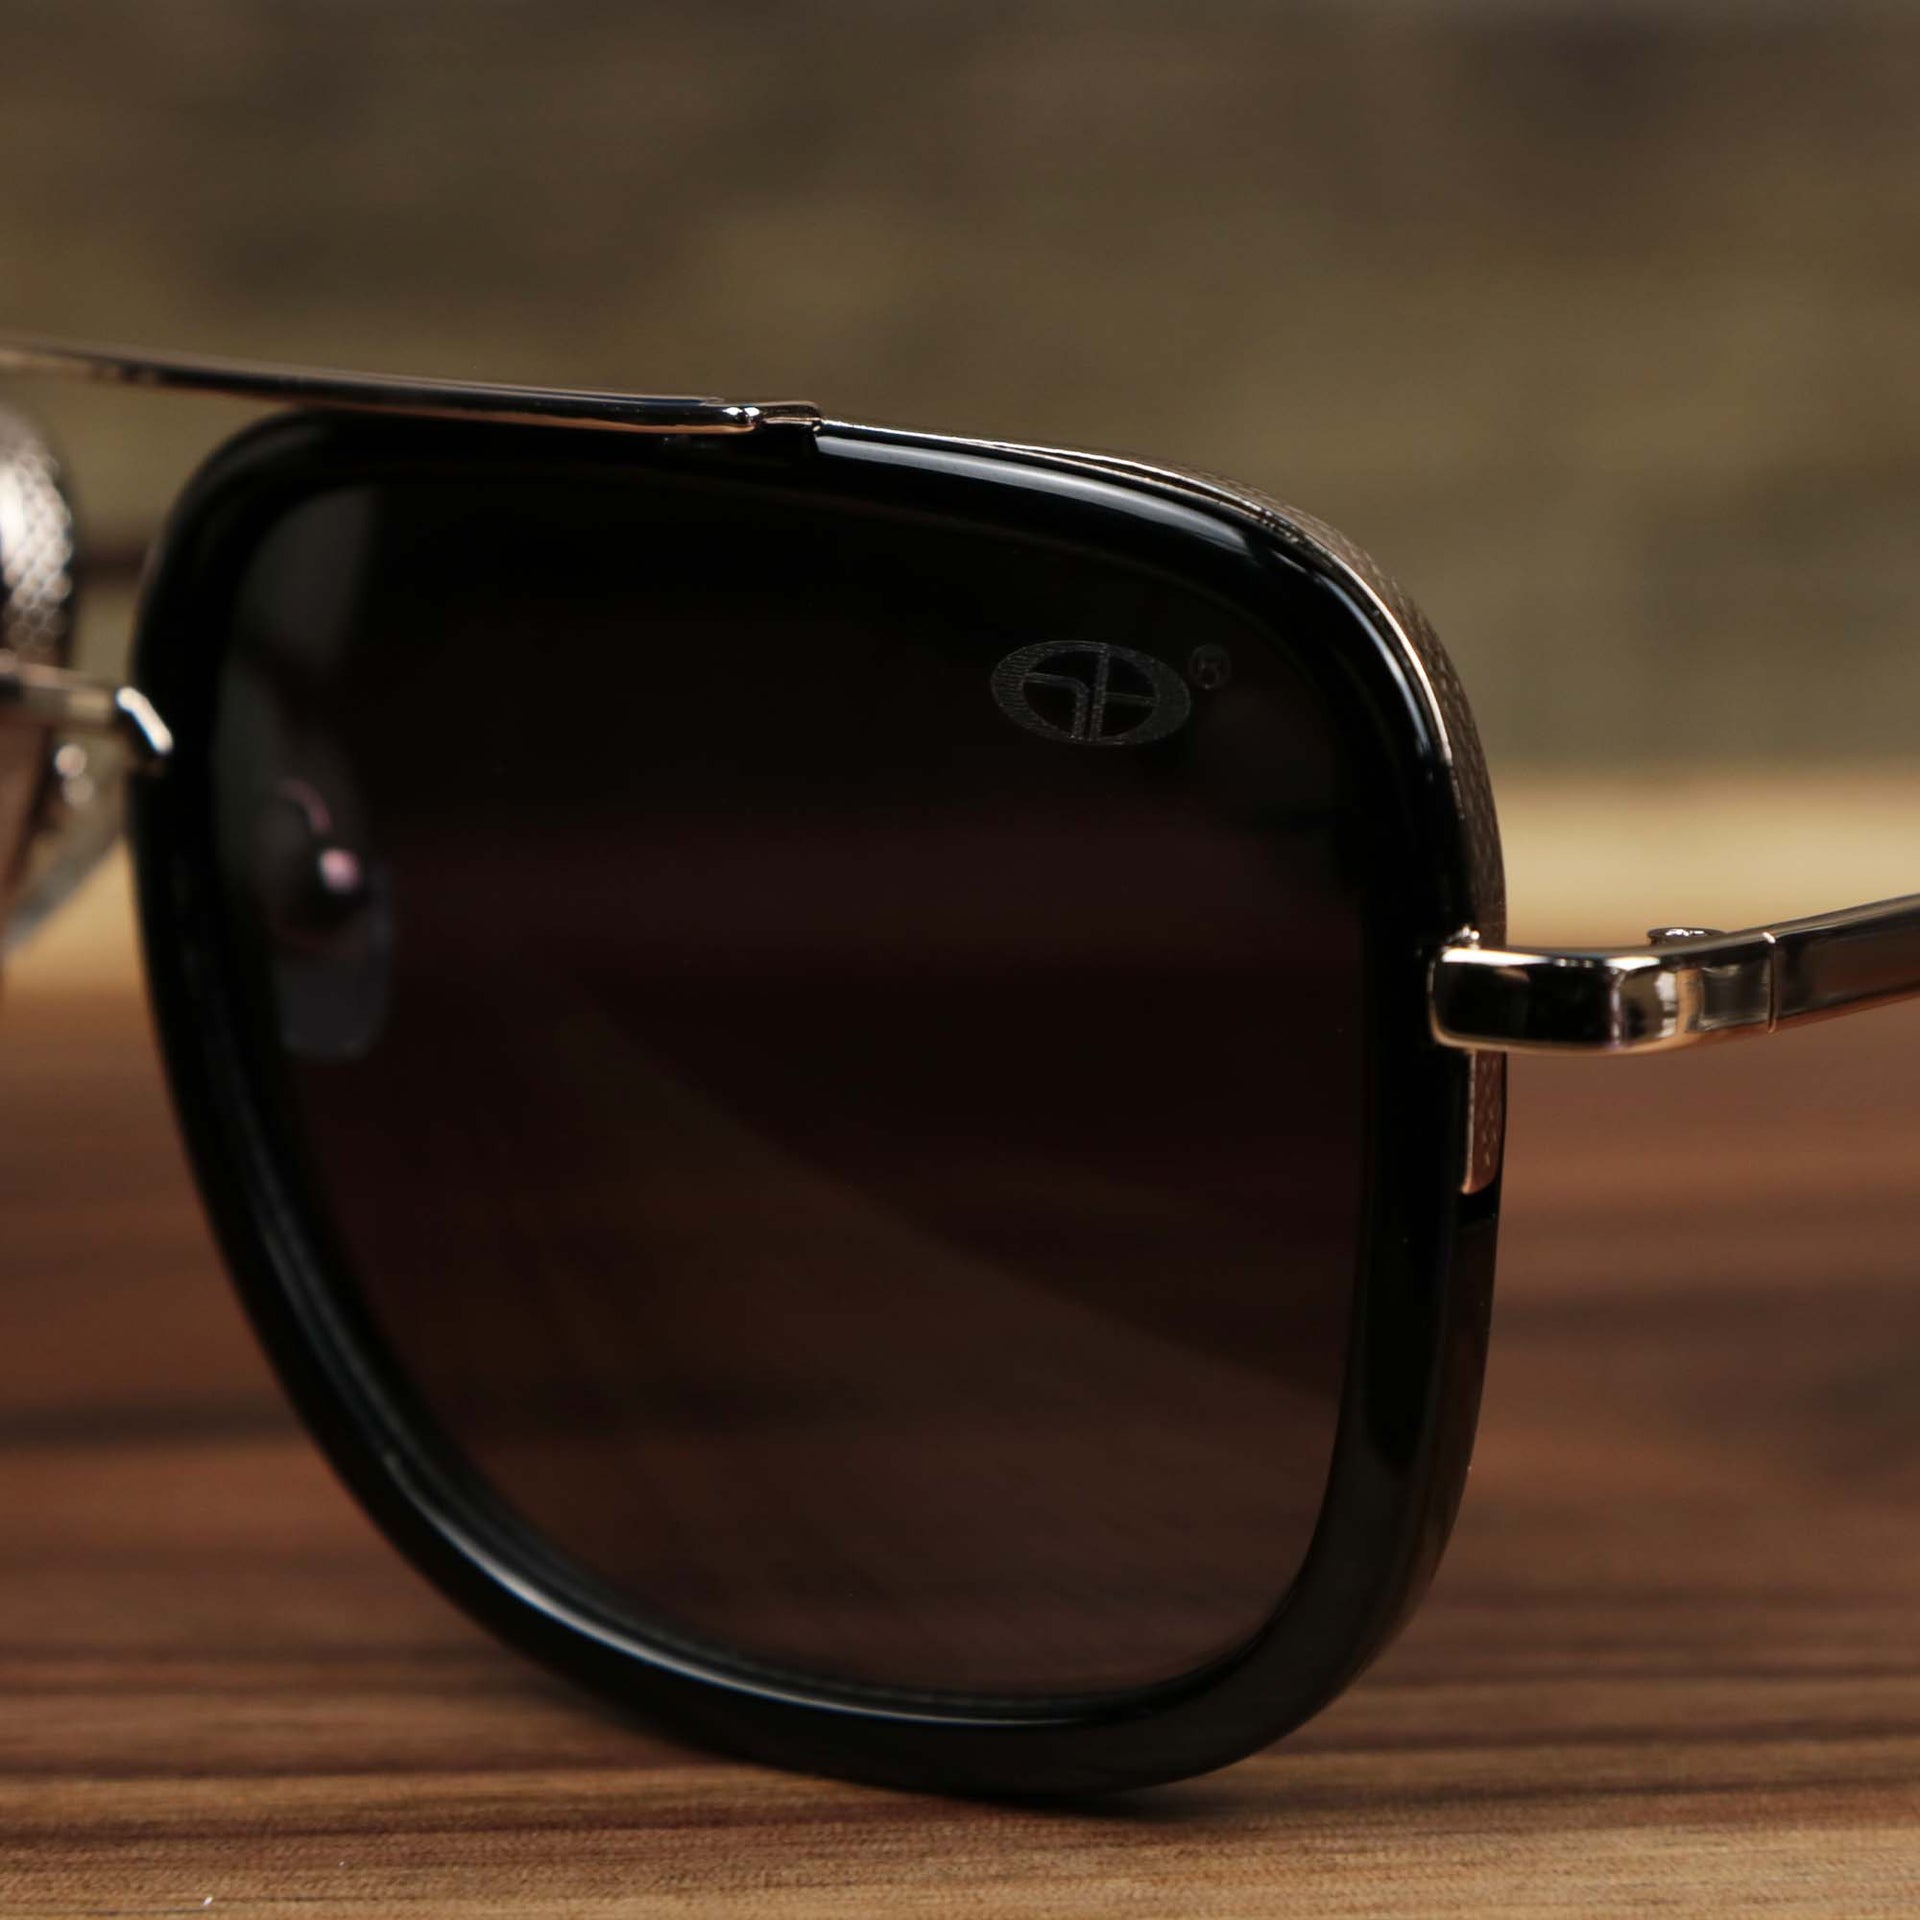 The hinge on the Round Frames Black Lens Sunglasses with Black Gold Frame